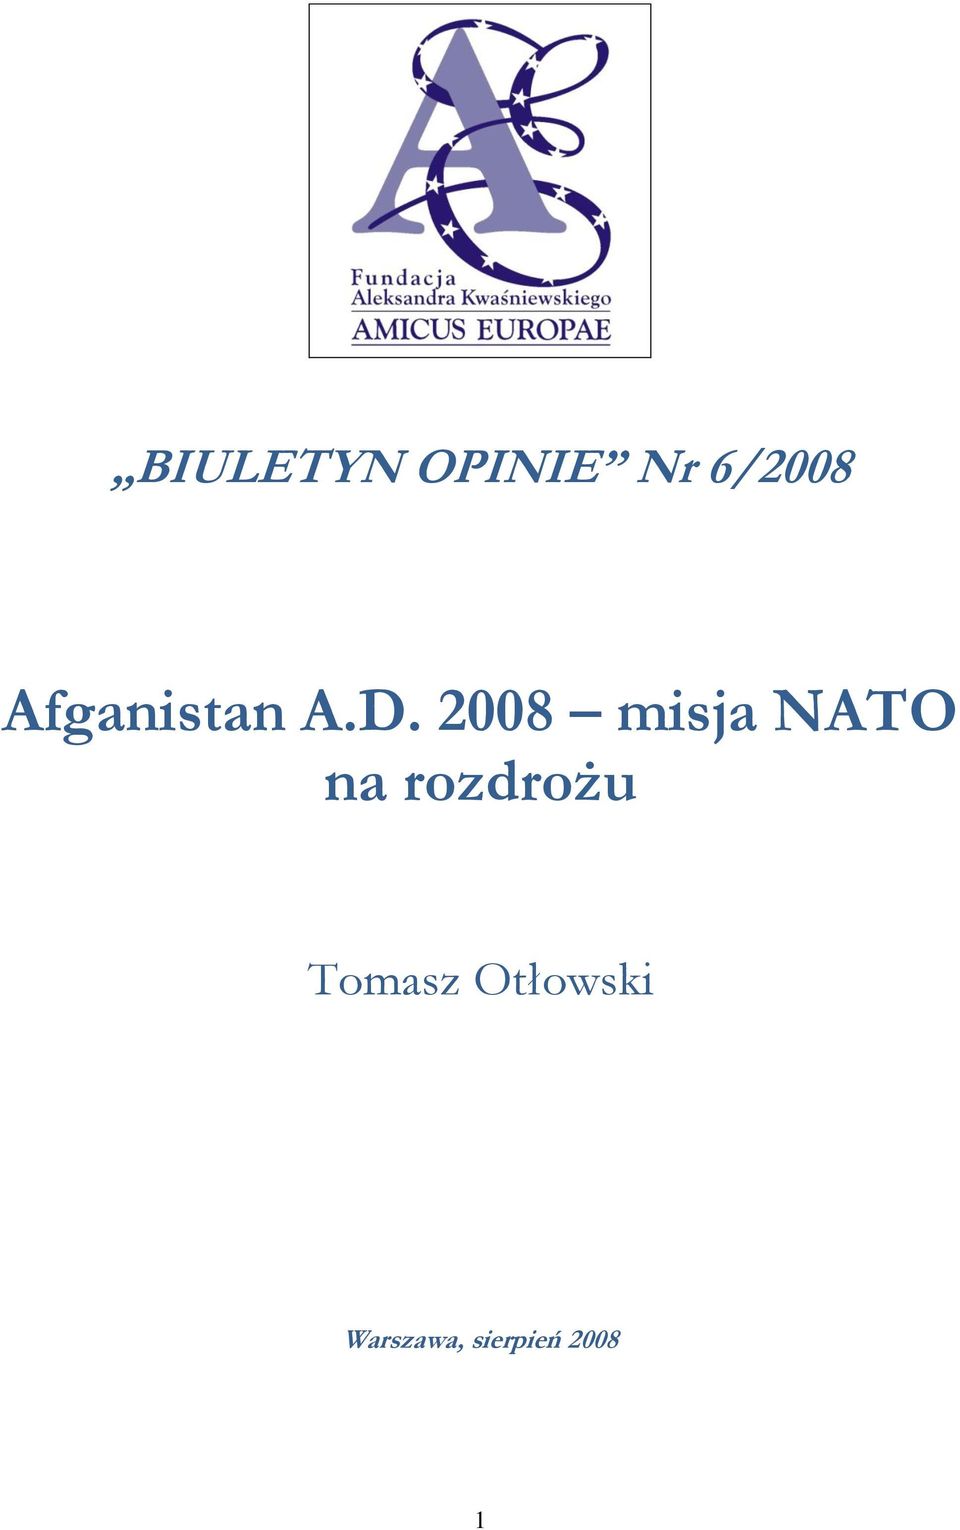 2008 misja NATO na rozdrożu